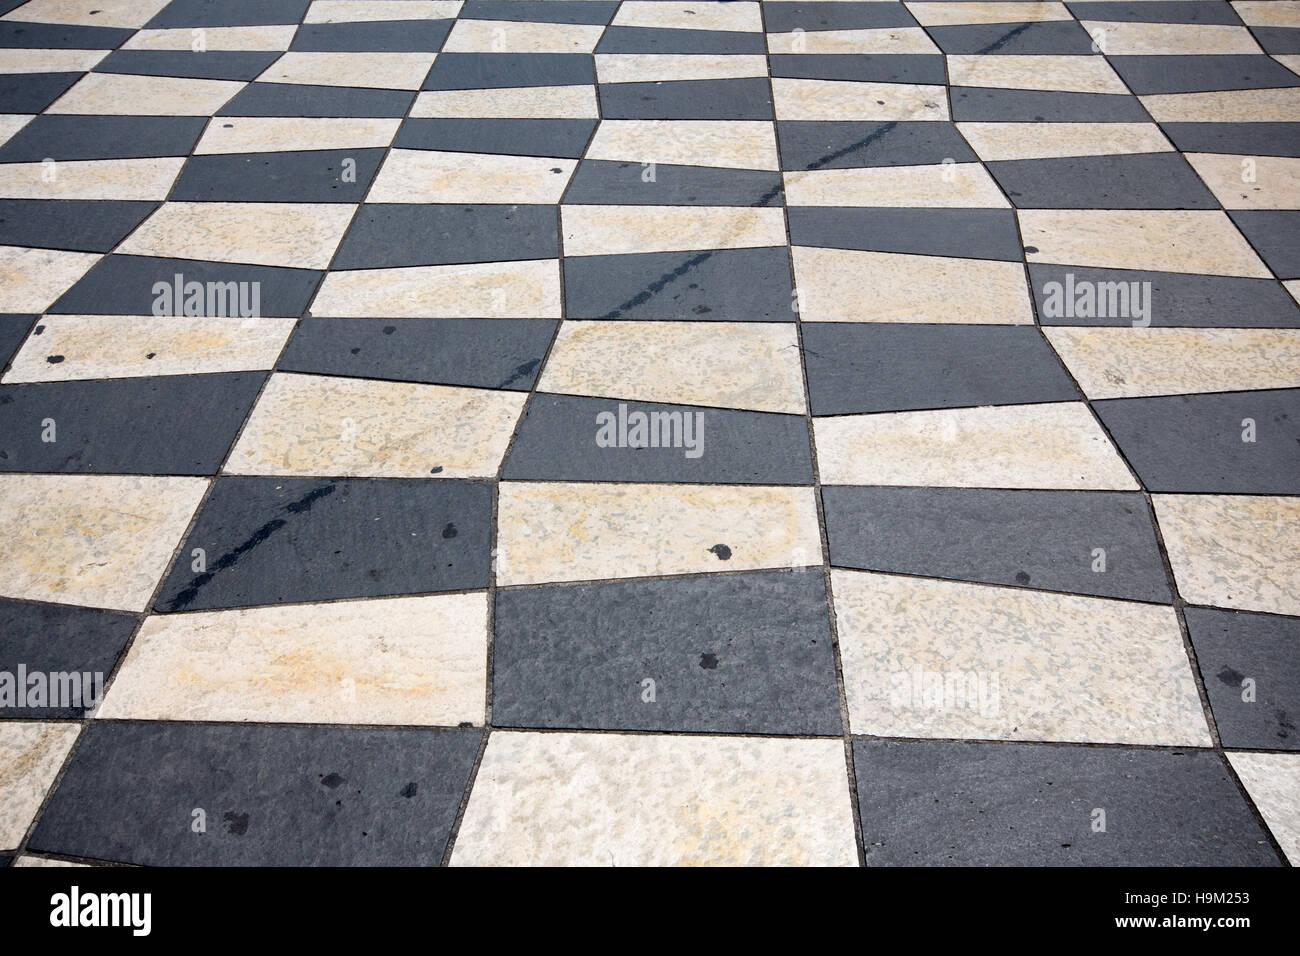 Black And White Checkered Floor Tiles Stock Photo 126445231 Alamy